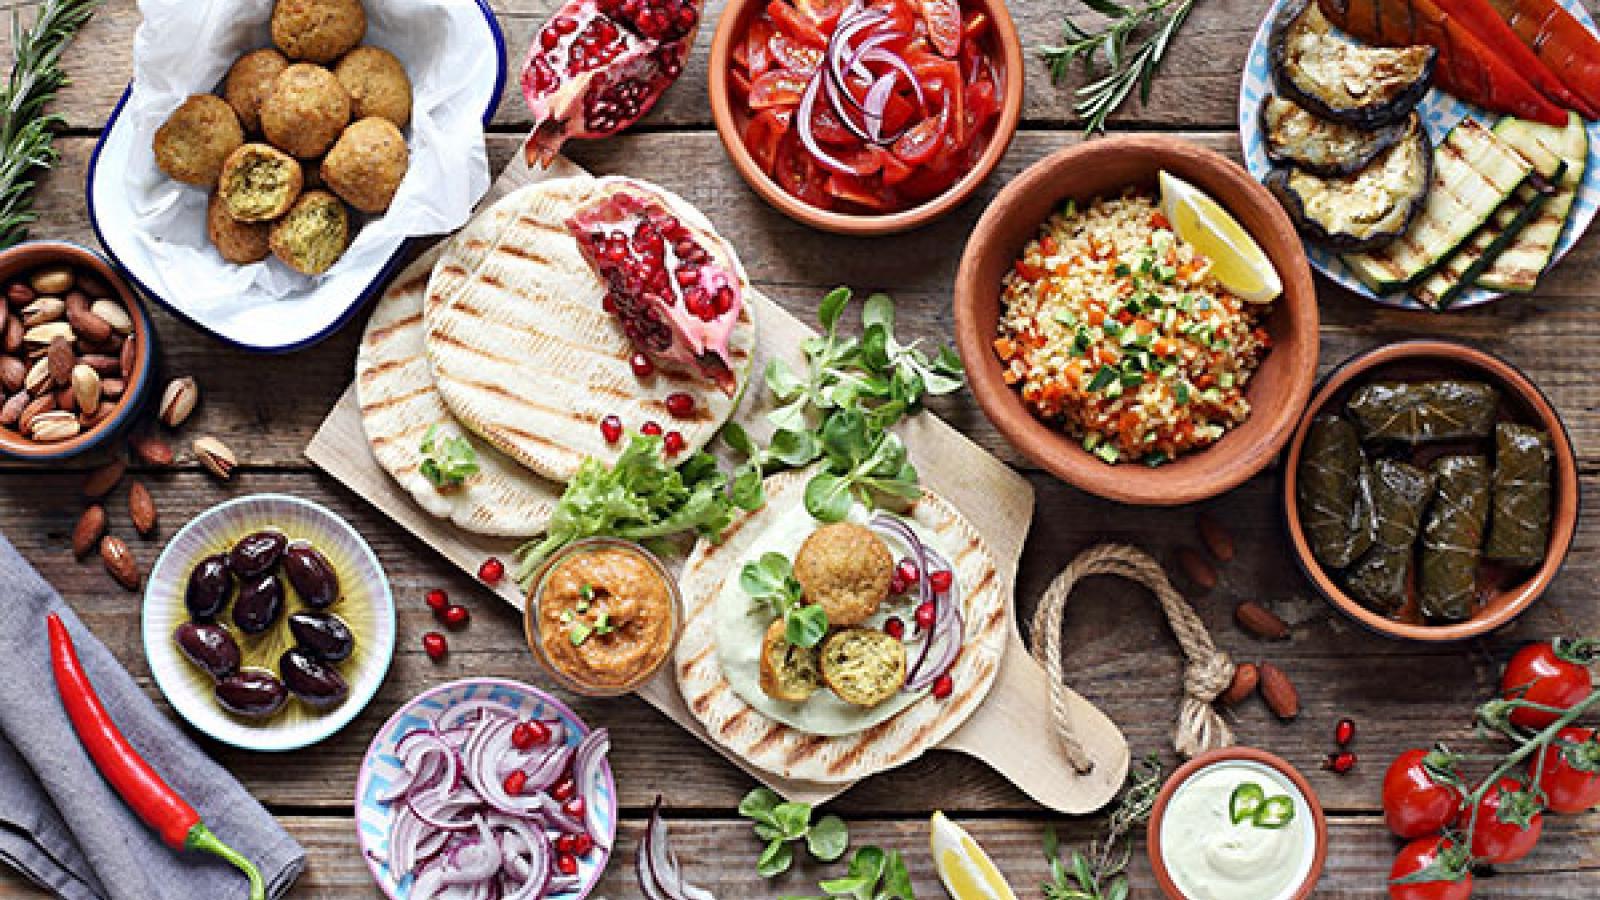 Should You Follow the Mediterranean 饮食?